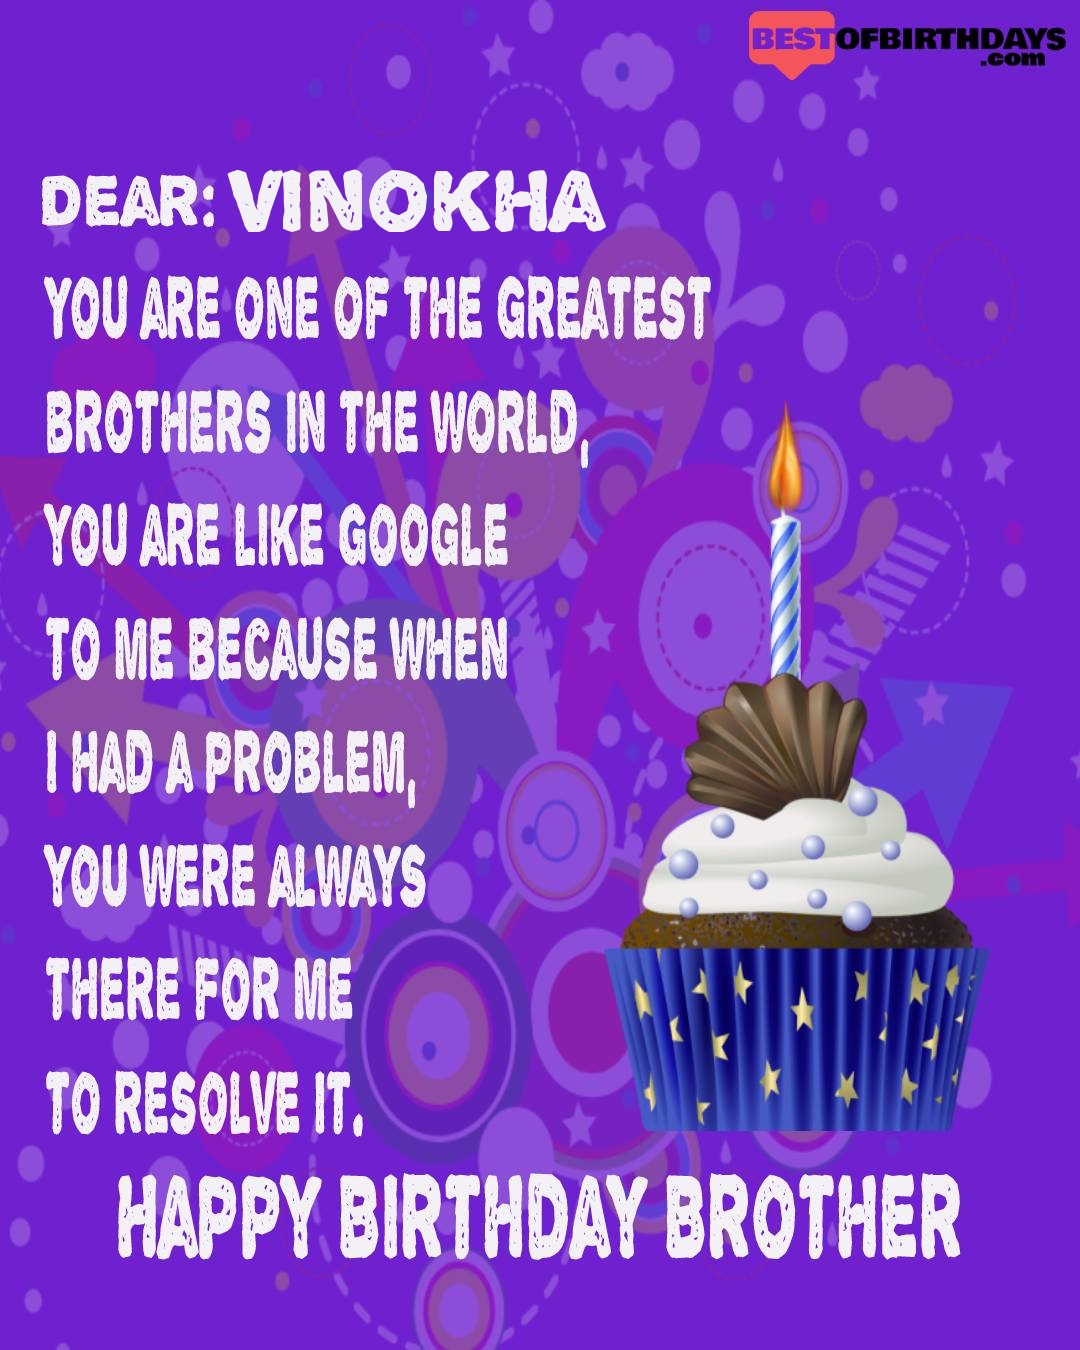 Happy birthday vinokha bhai brother bro